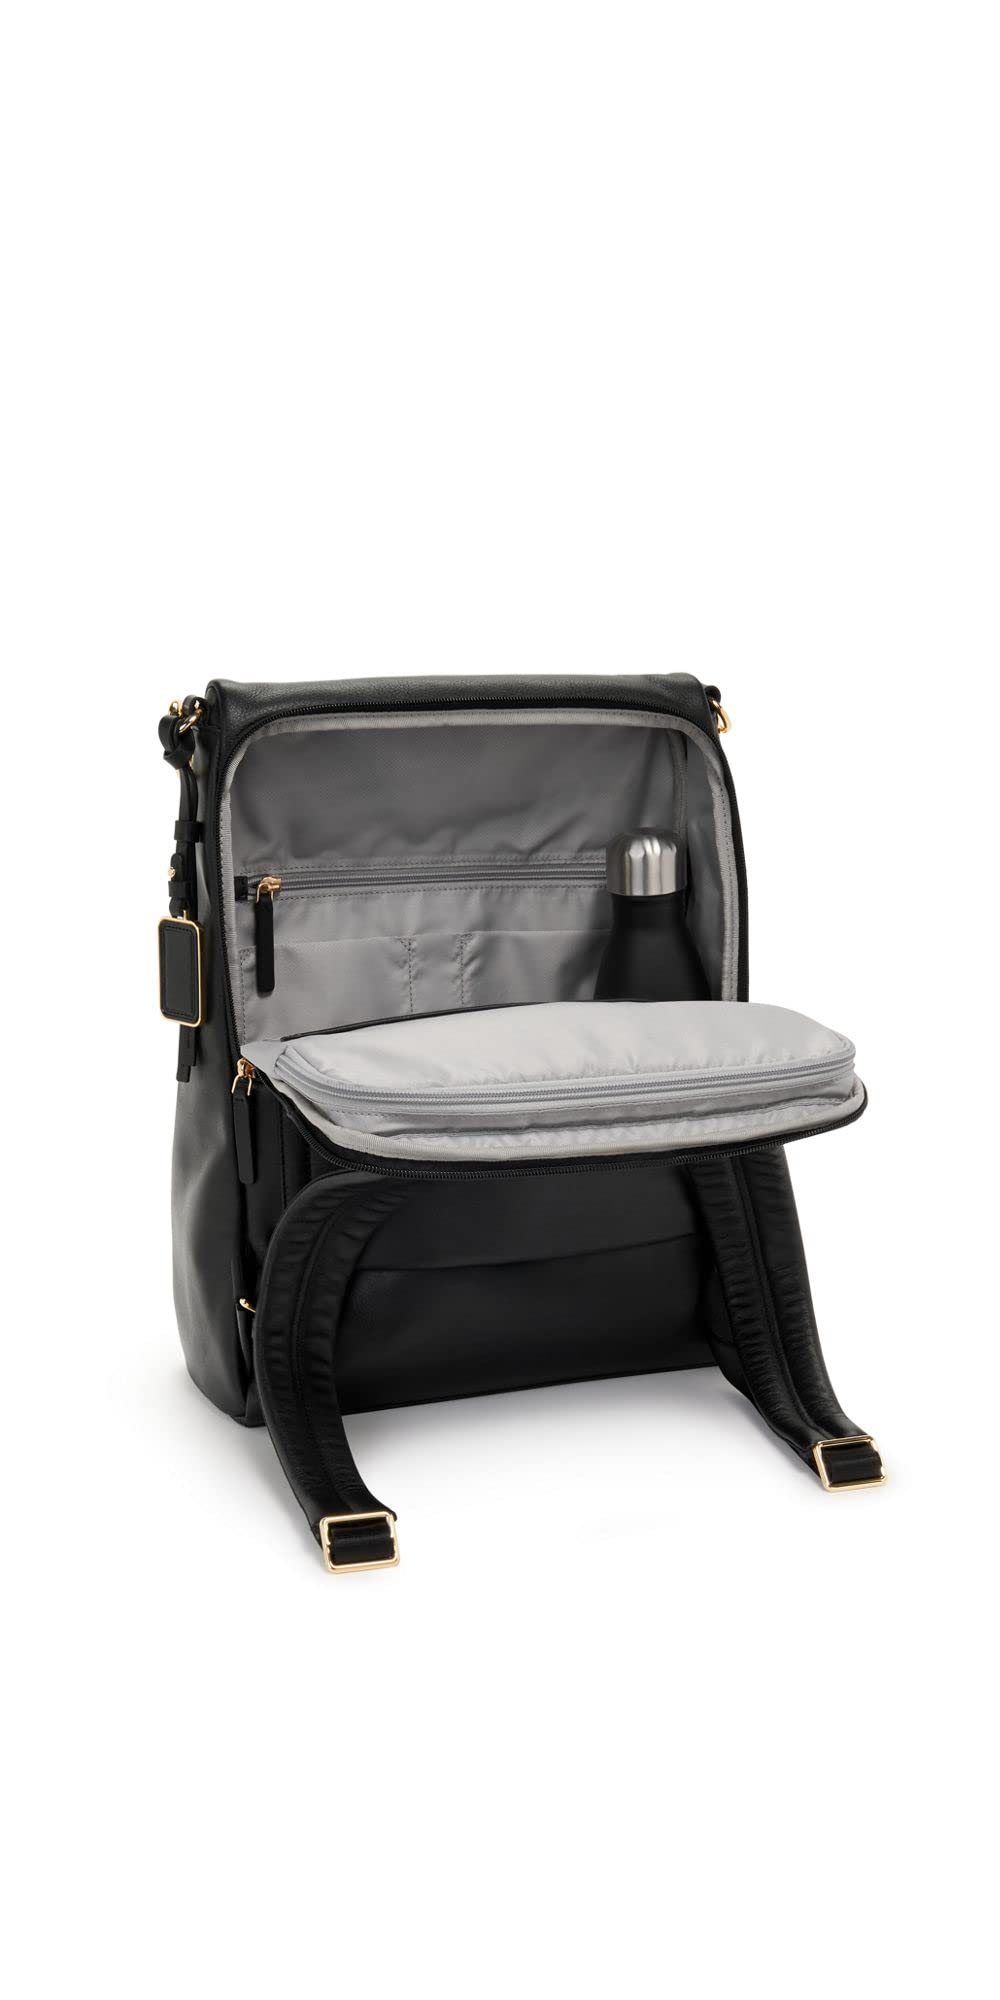 TUMI Voyageur Liv Backpack/Tote - Backpack or Tote Bag - Tote Bag & Backpack Combo - Black Leather & Gold Hardware